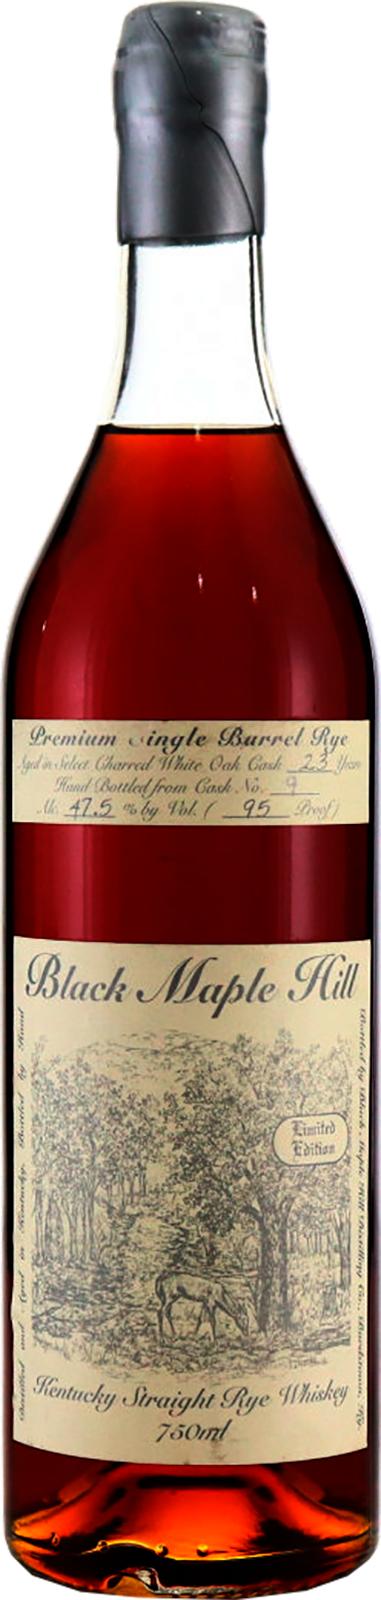 Black Maple Hill 23yo Premium Single Barrel Rye Select Charred White Oak Barrel 9 47.5% 750ml